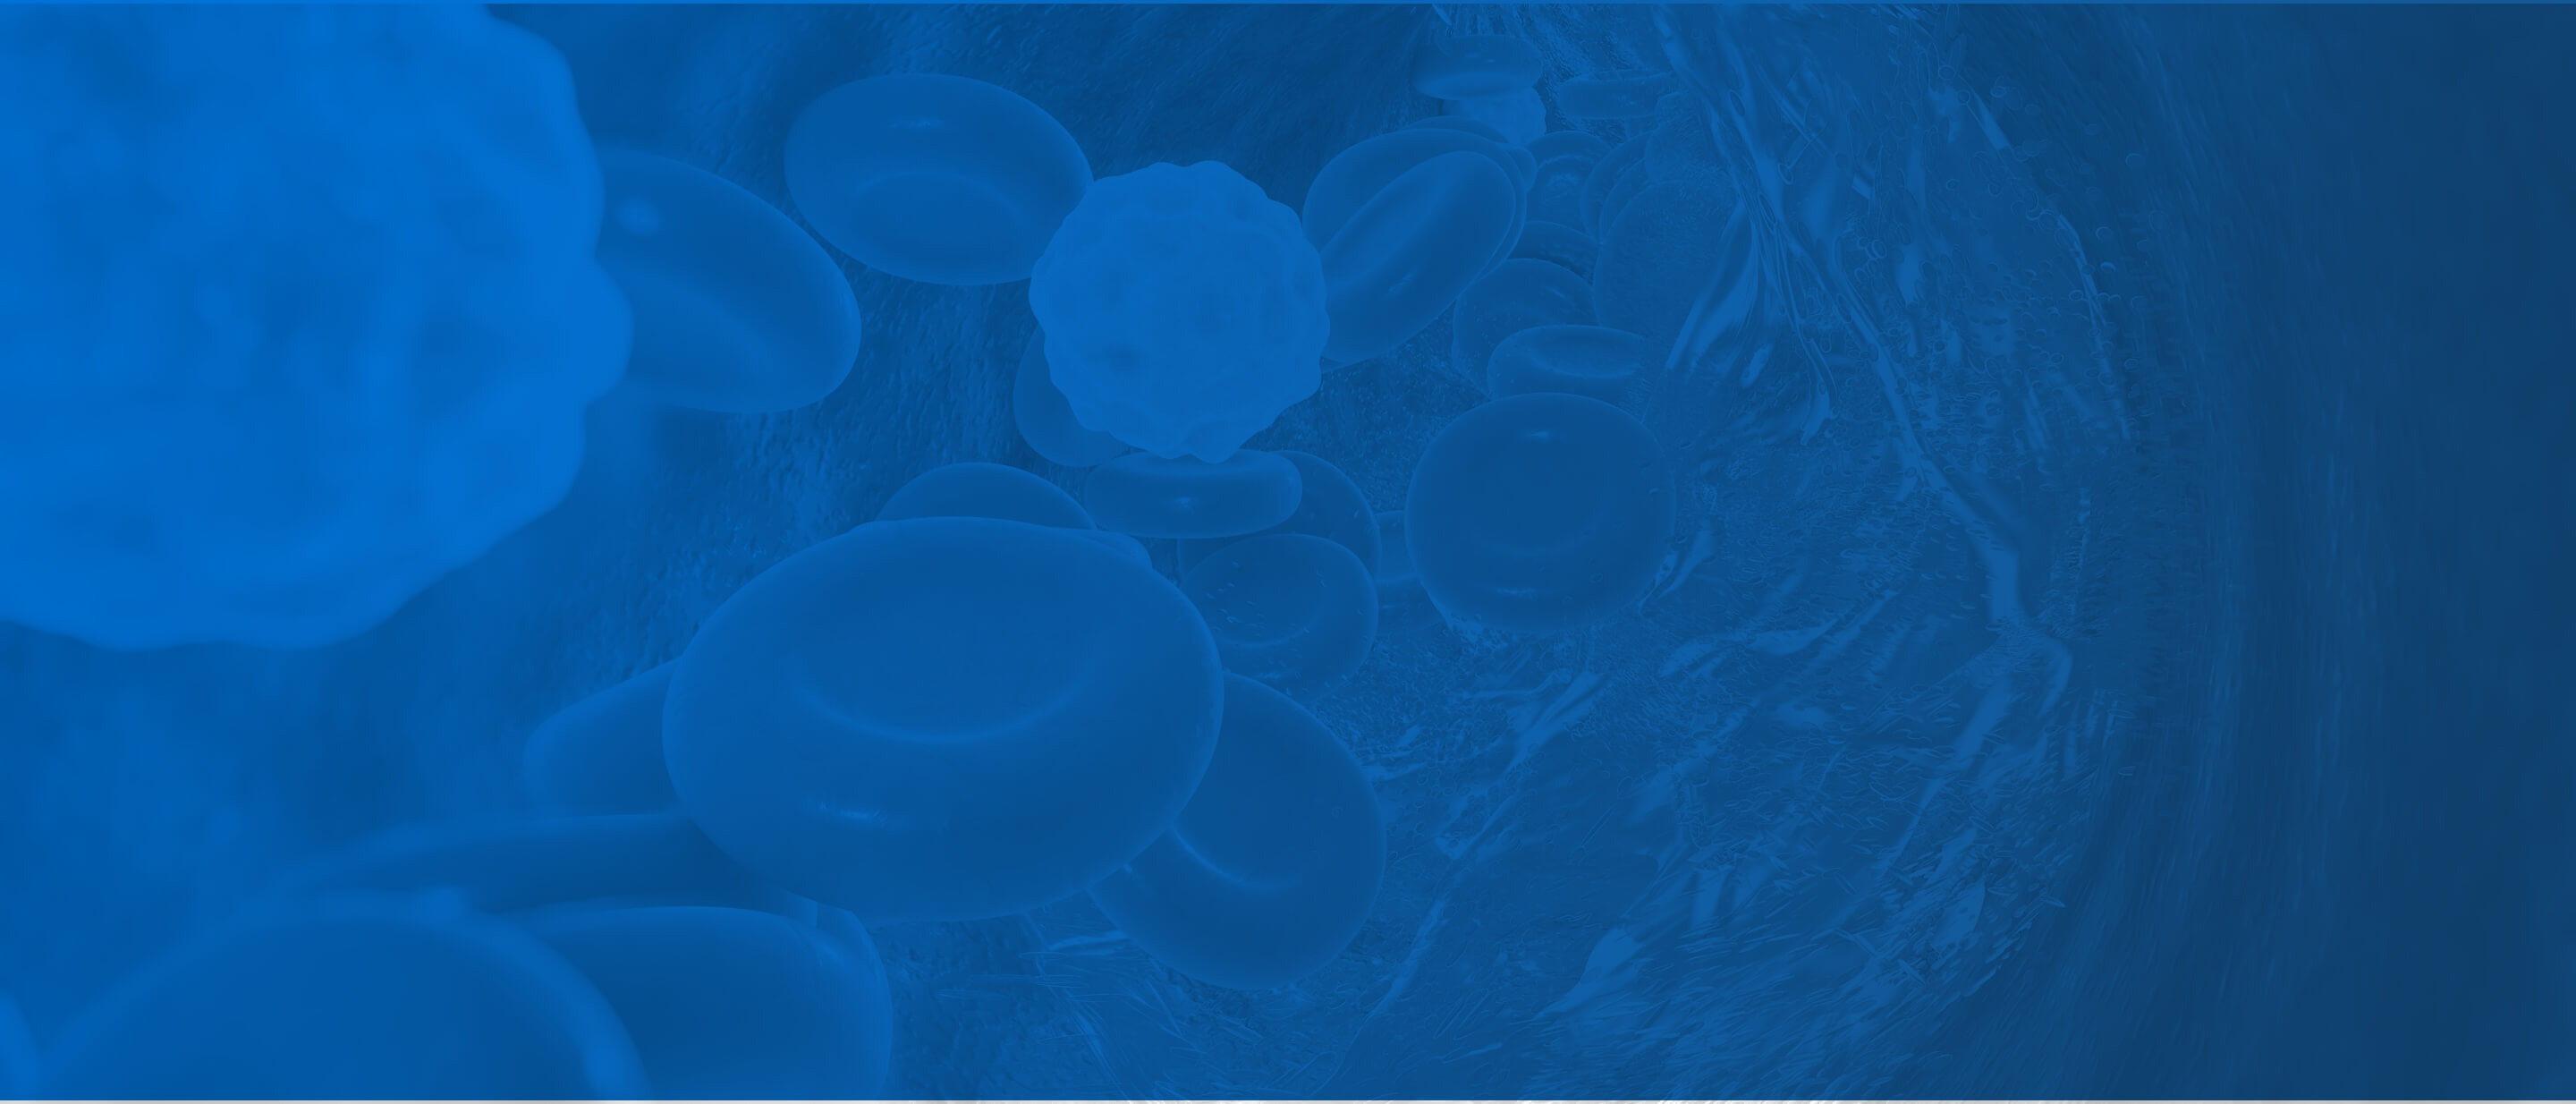 background-cells-blue